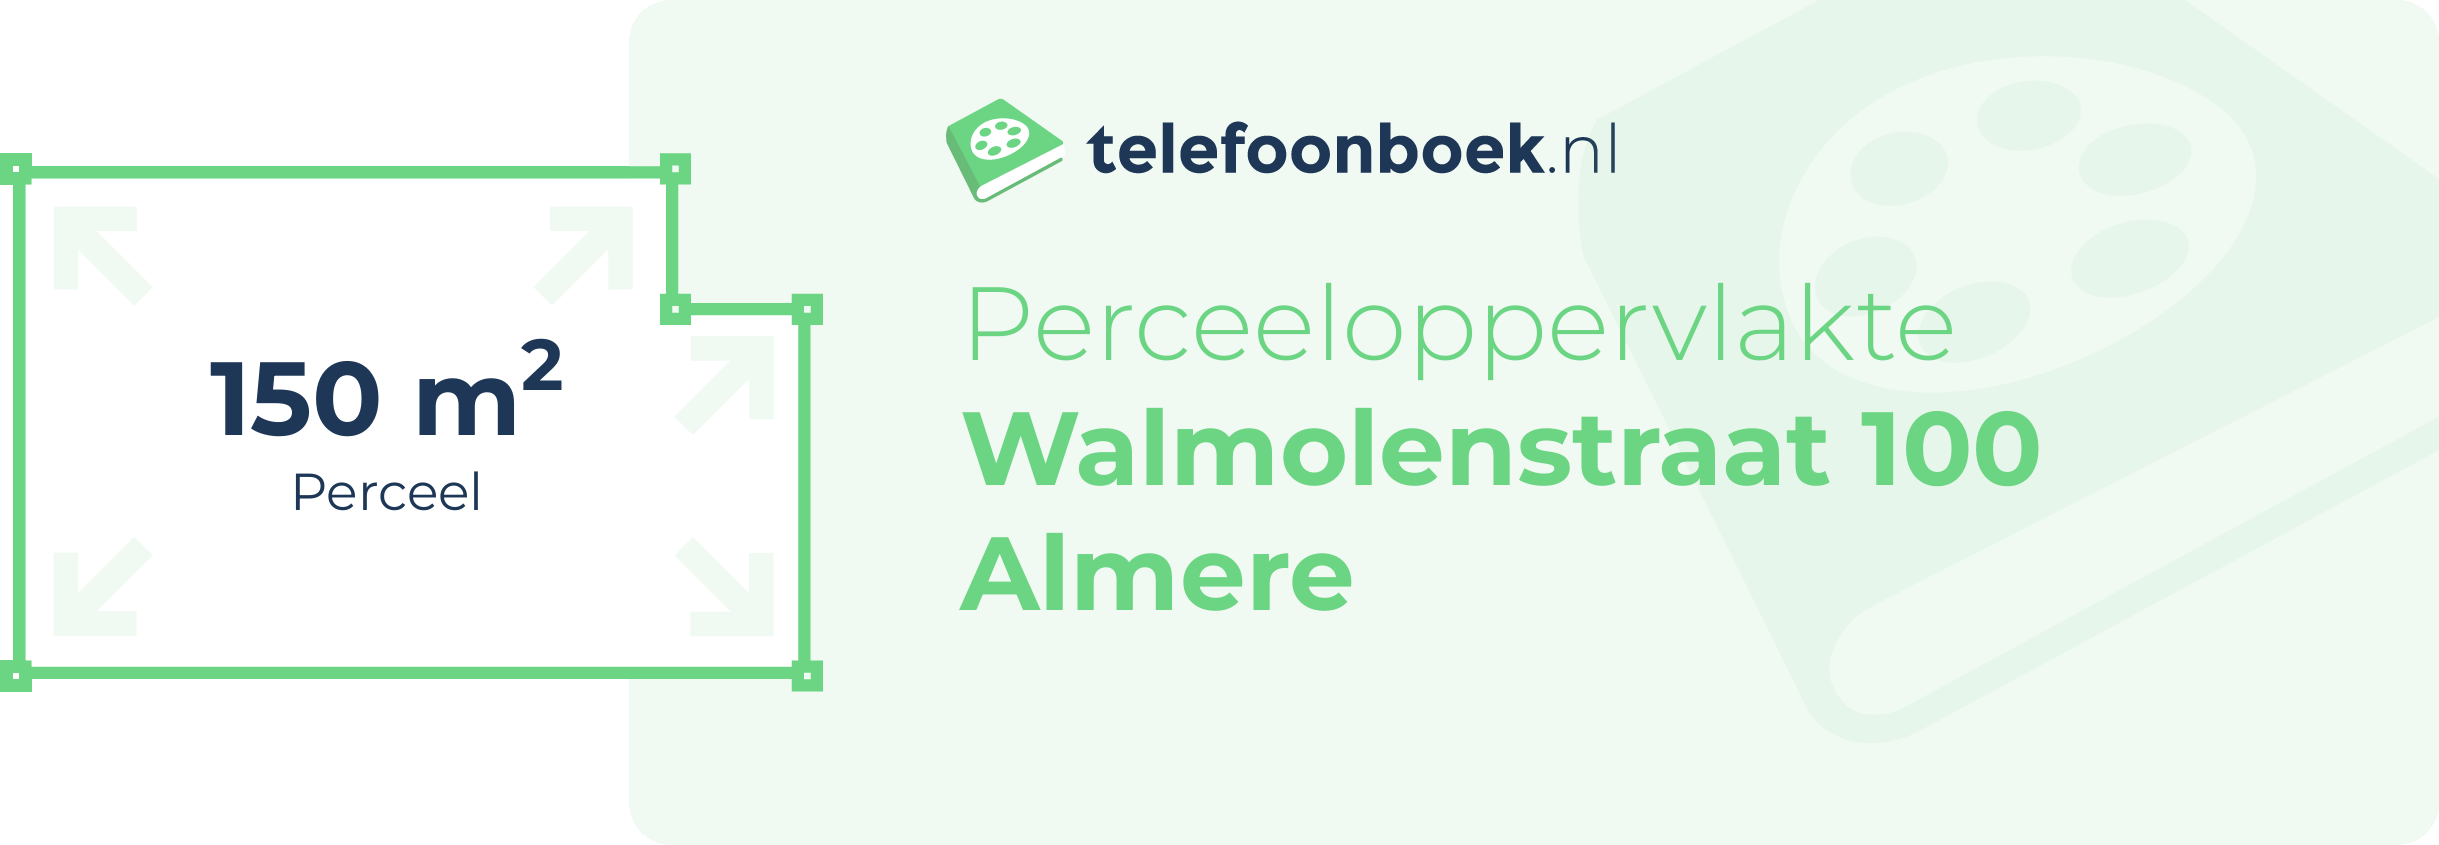 Perceeloppervlakte Walmolenstraat 100 Almere